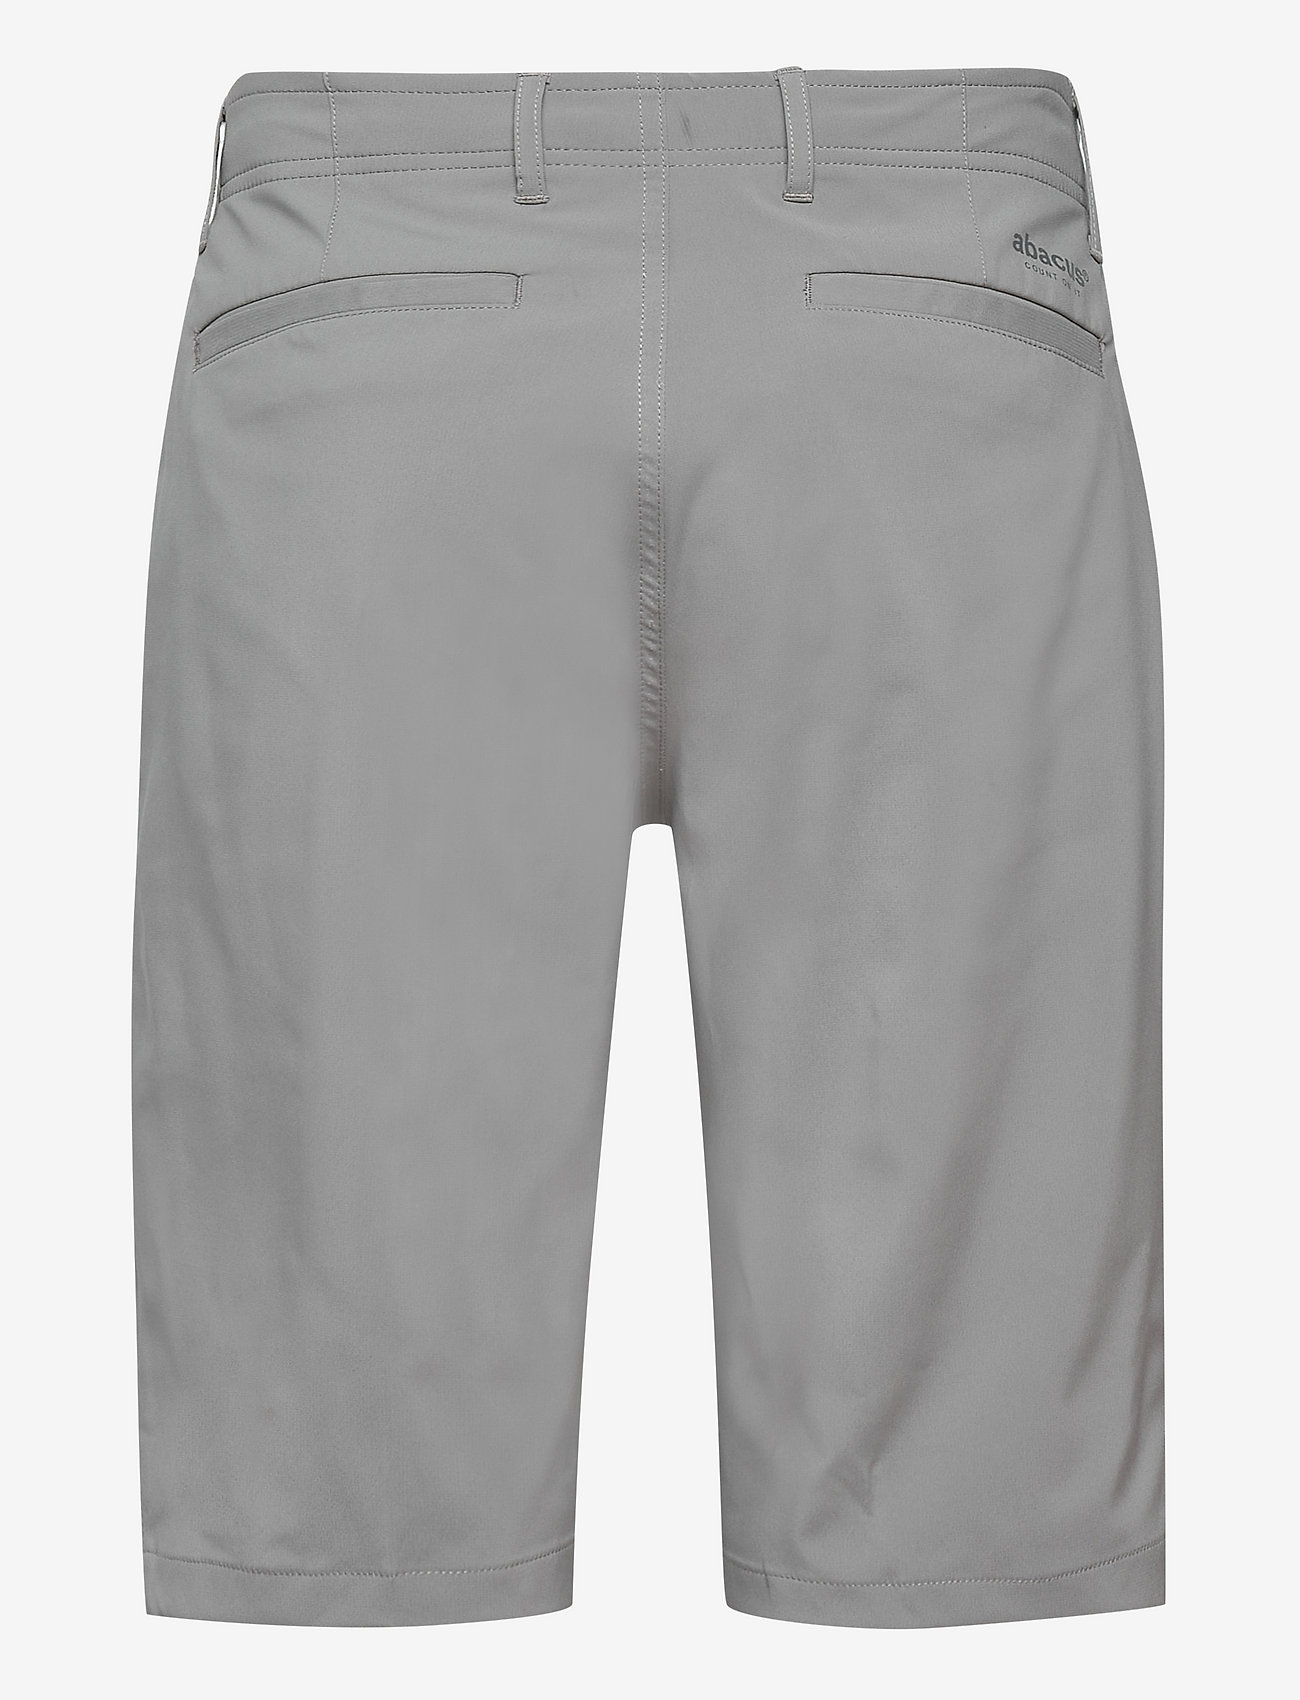 Abacus - Men Cleek flex shorts - golf shorts - grey - 1